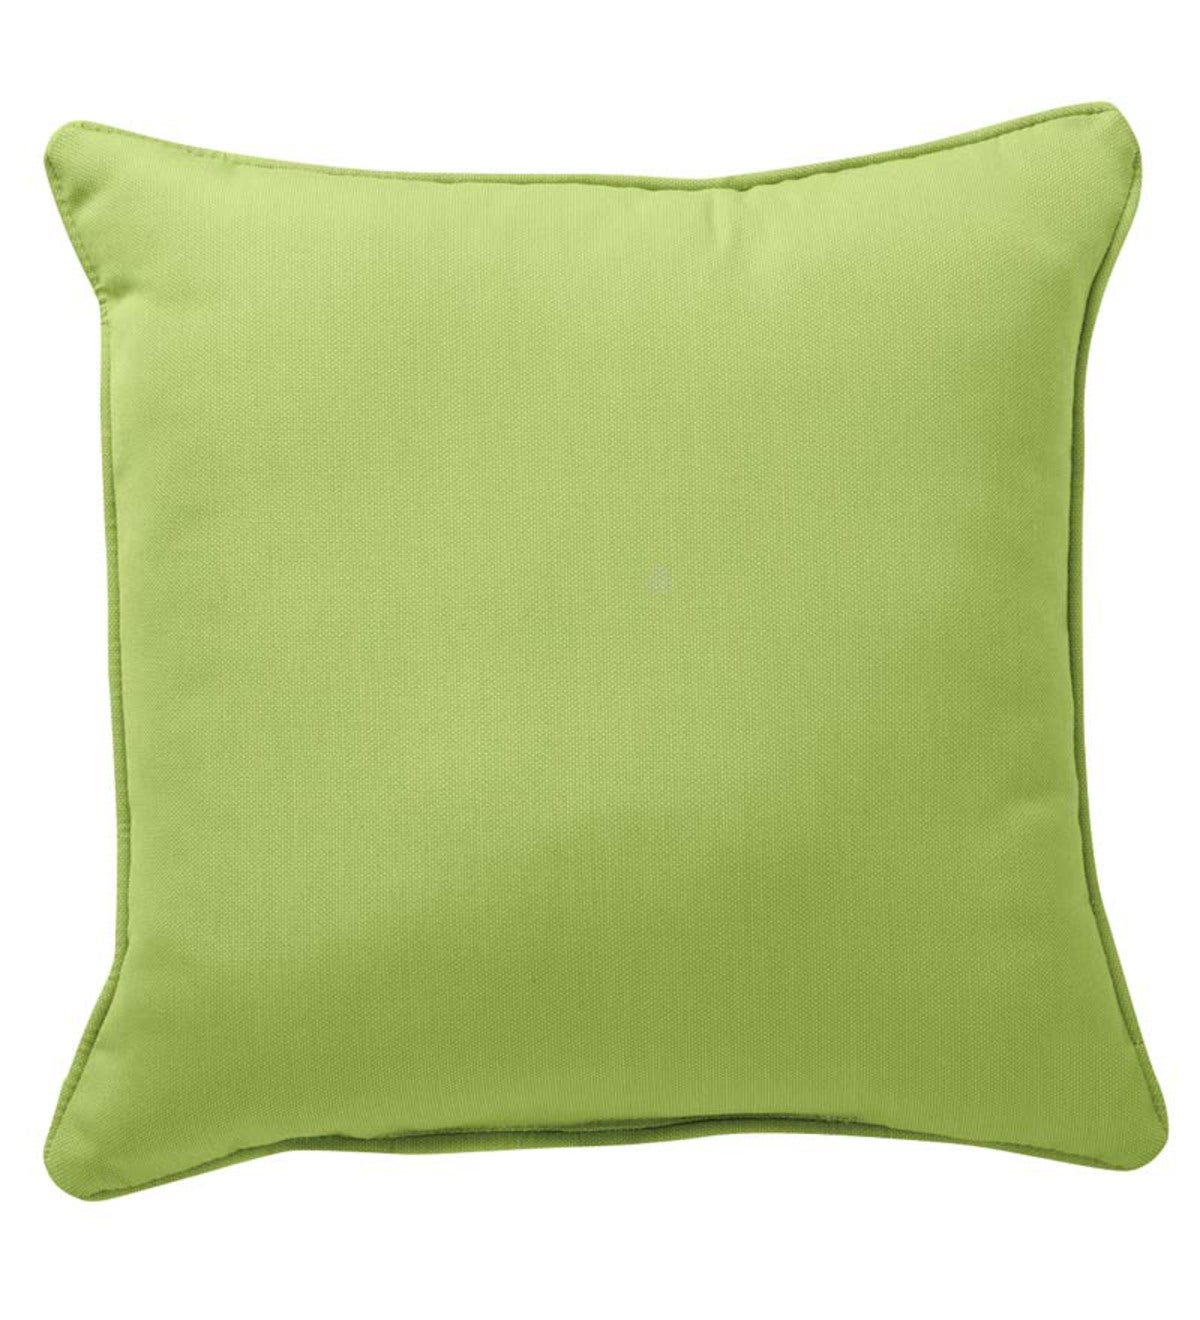 22”sq. Sunbrella™ Deluxe Throw Pillow - Lime